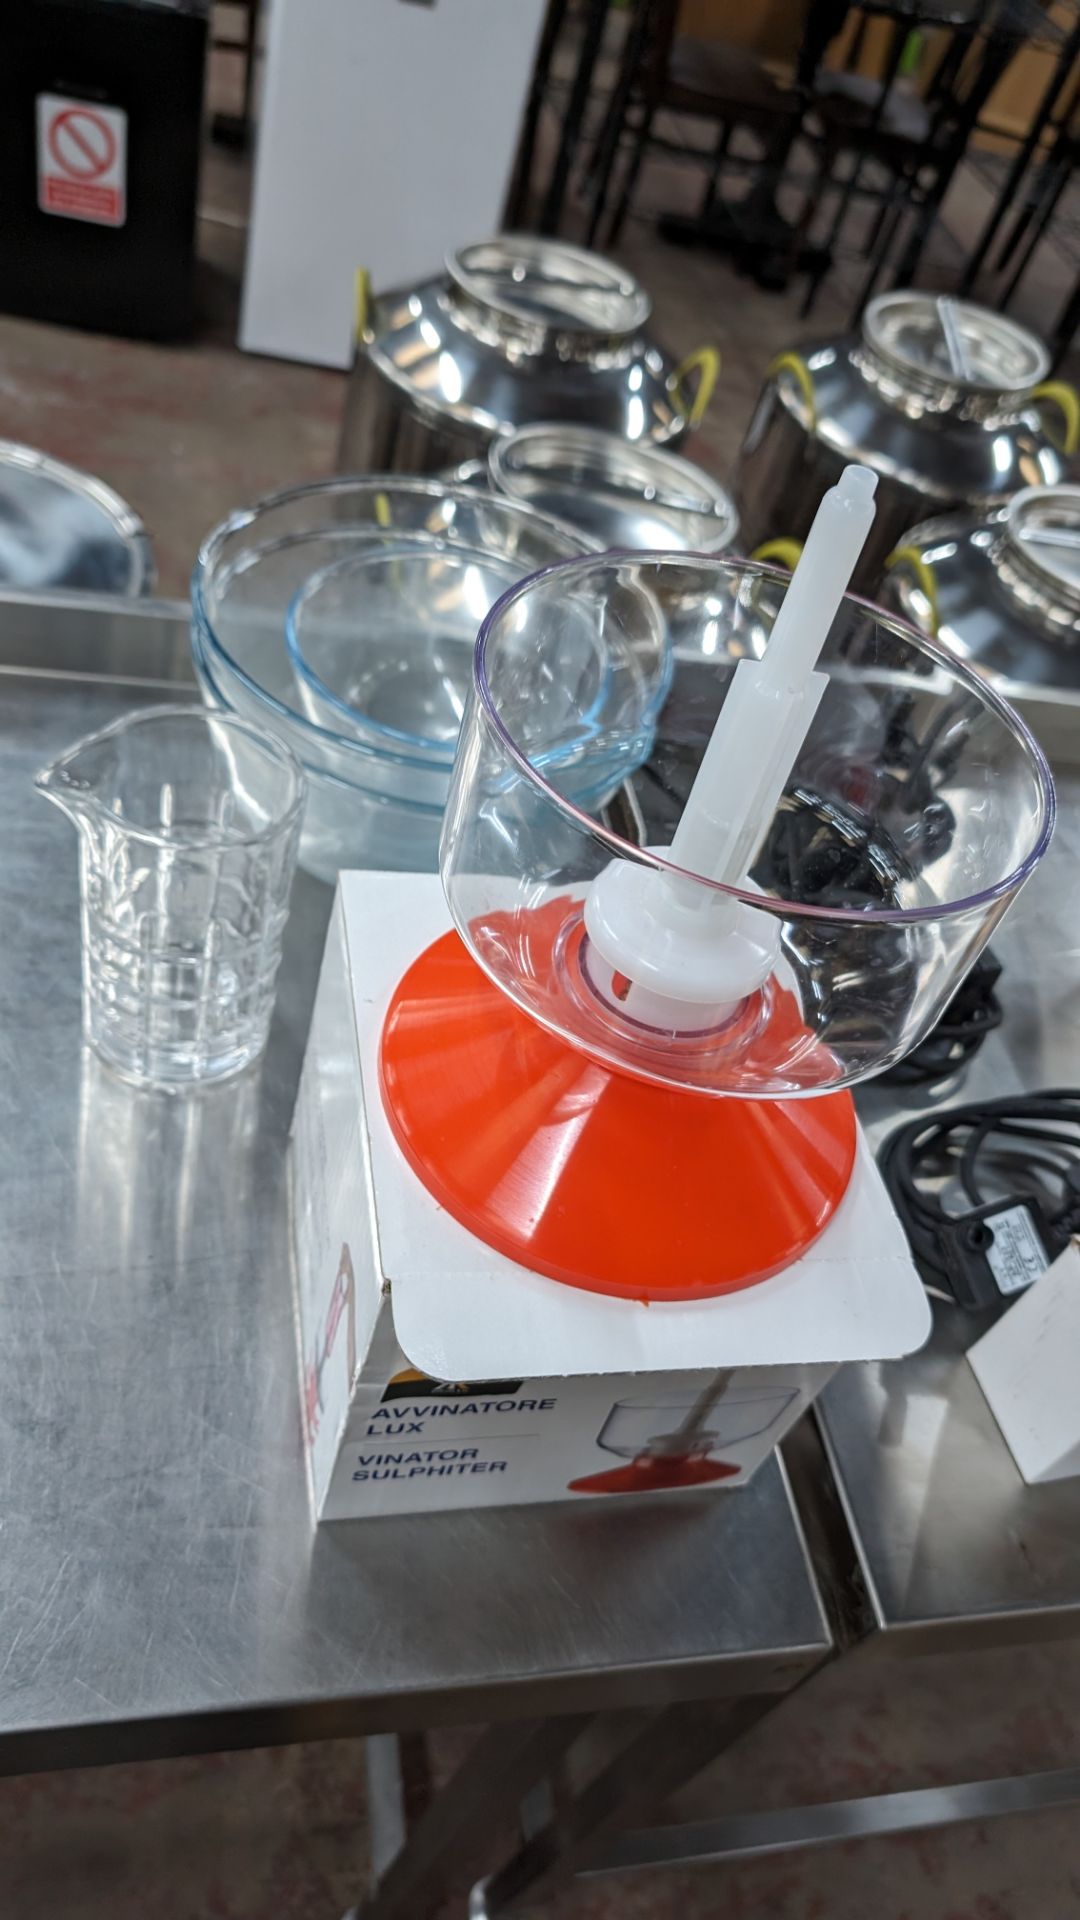 Quantity of glass bowls plus glass jug and Vinator Sulphiter